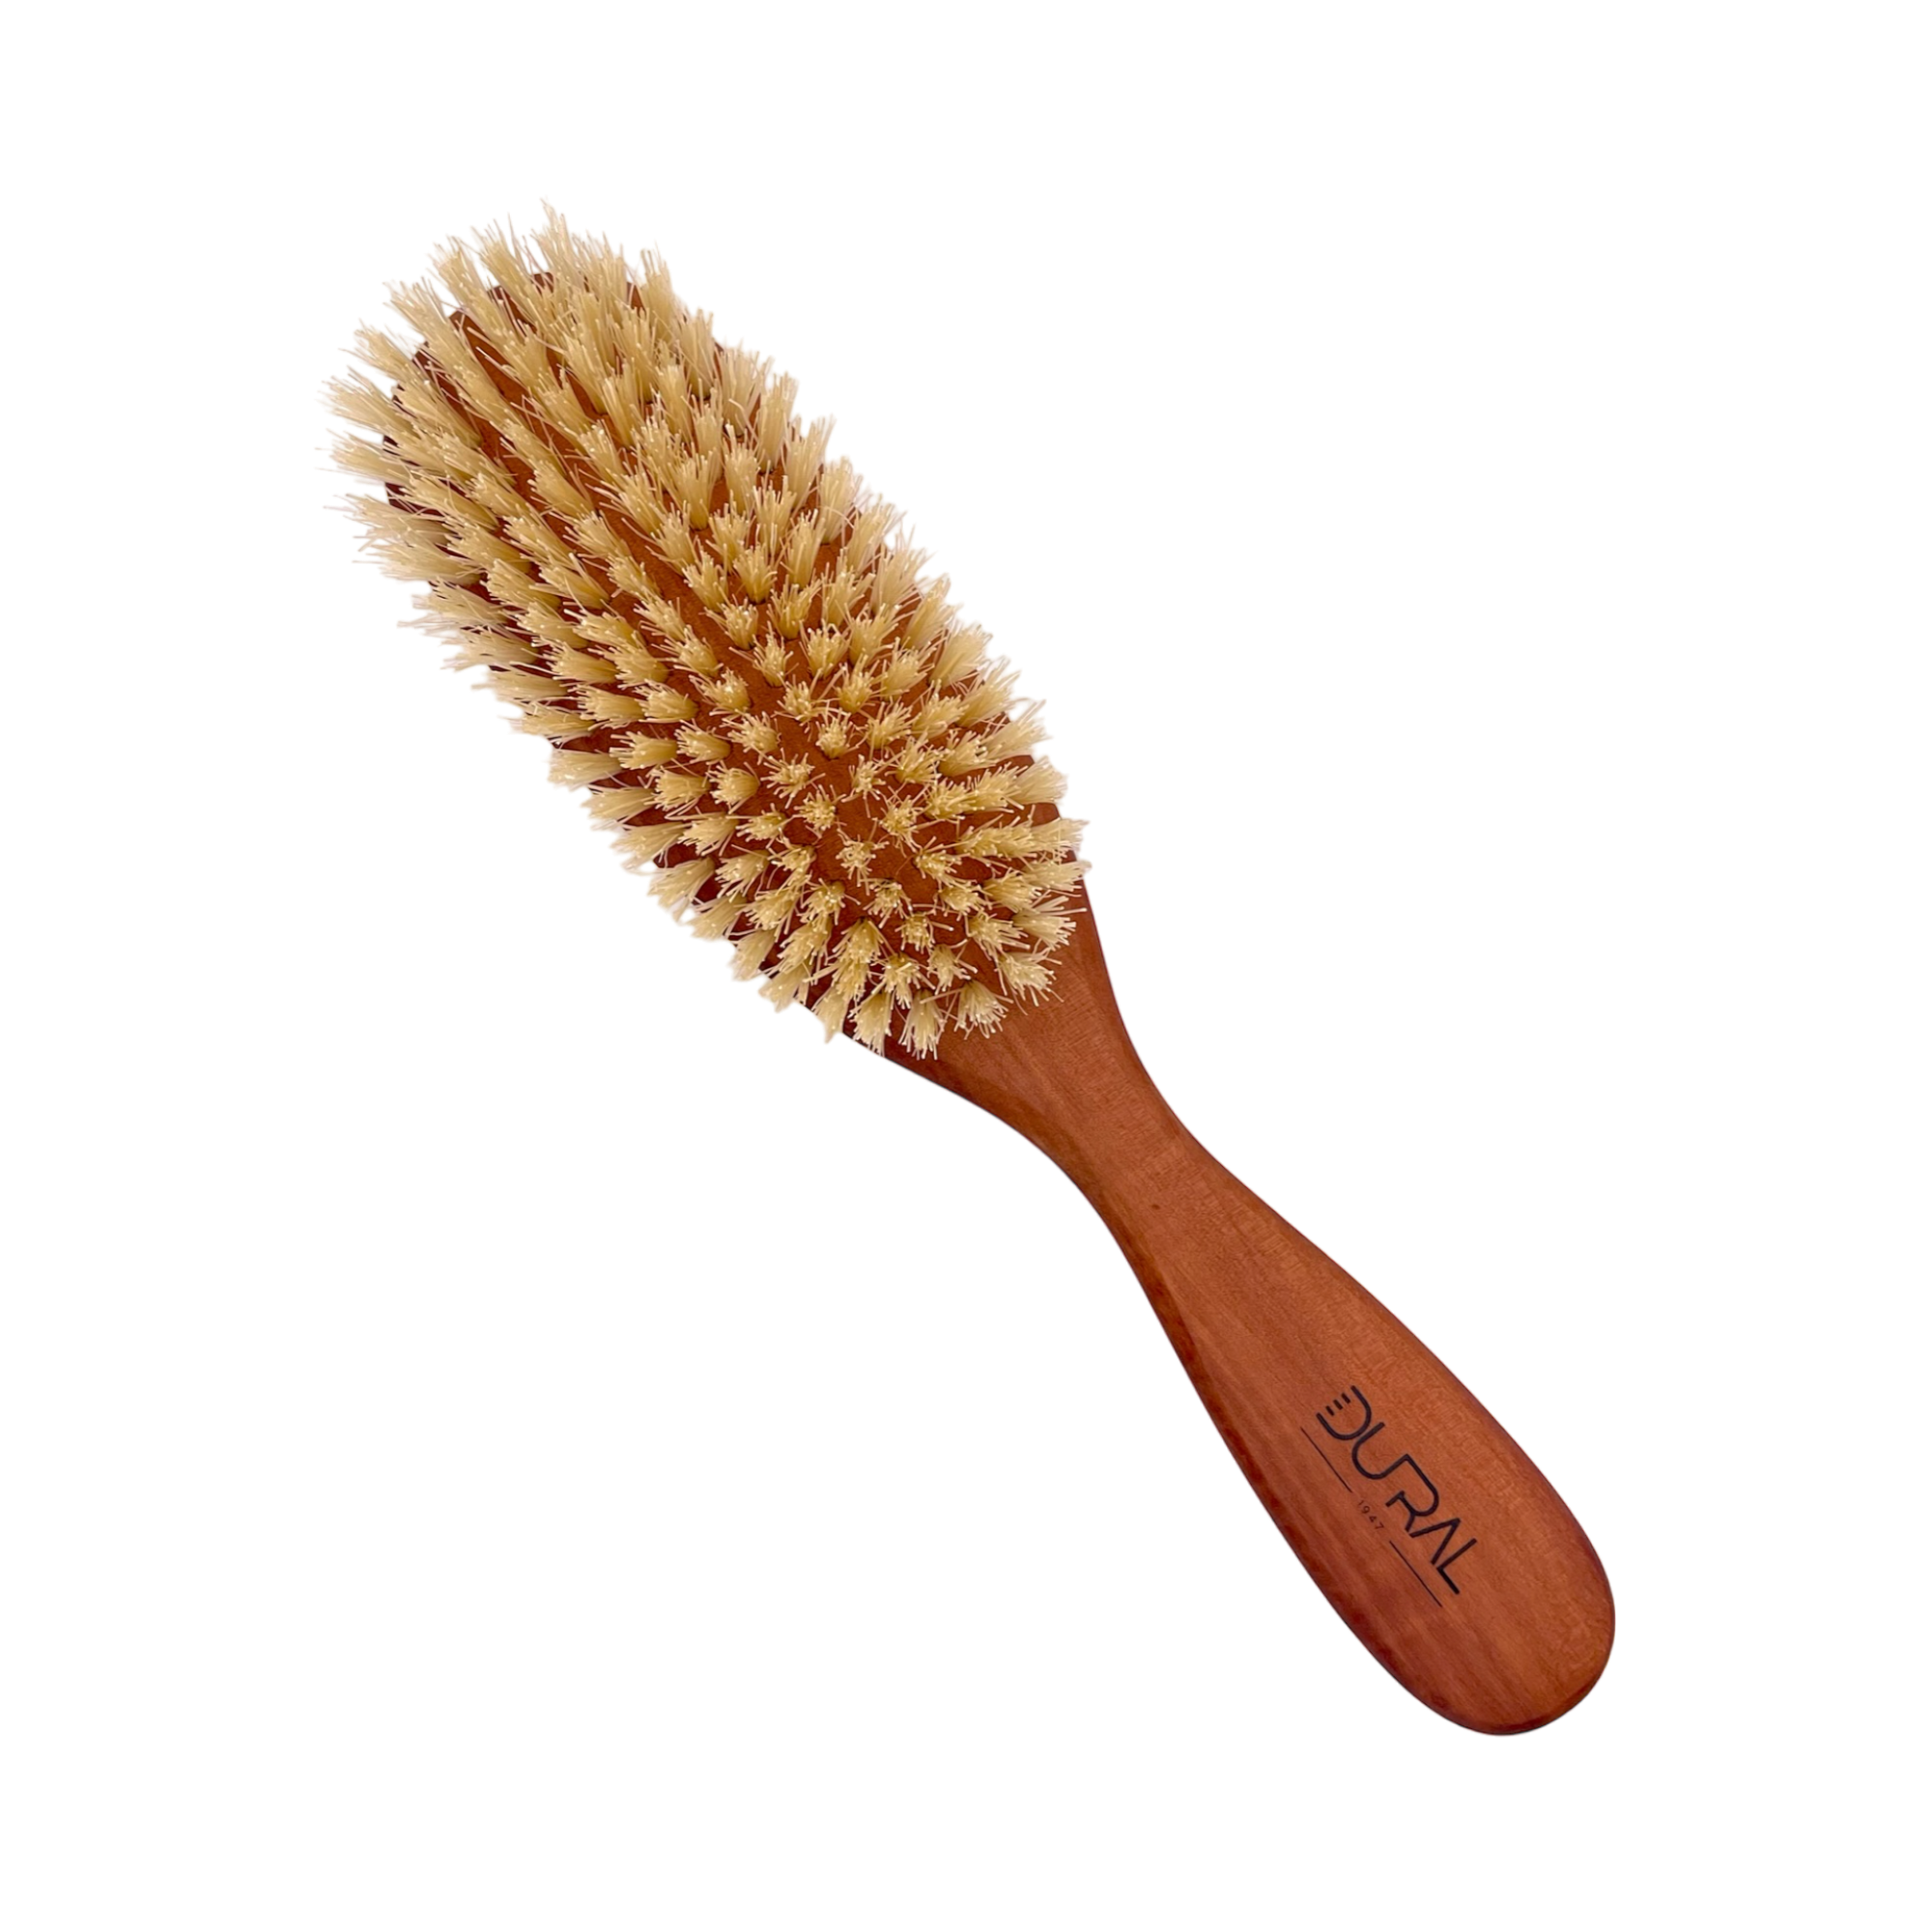 Dural Pear Wood big oval hair brush with natural bristles